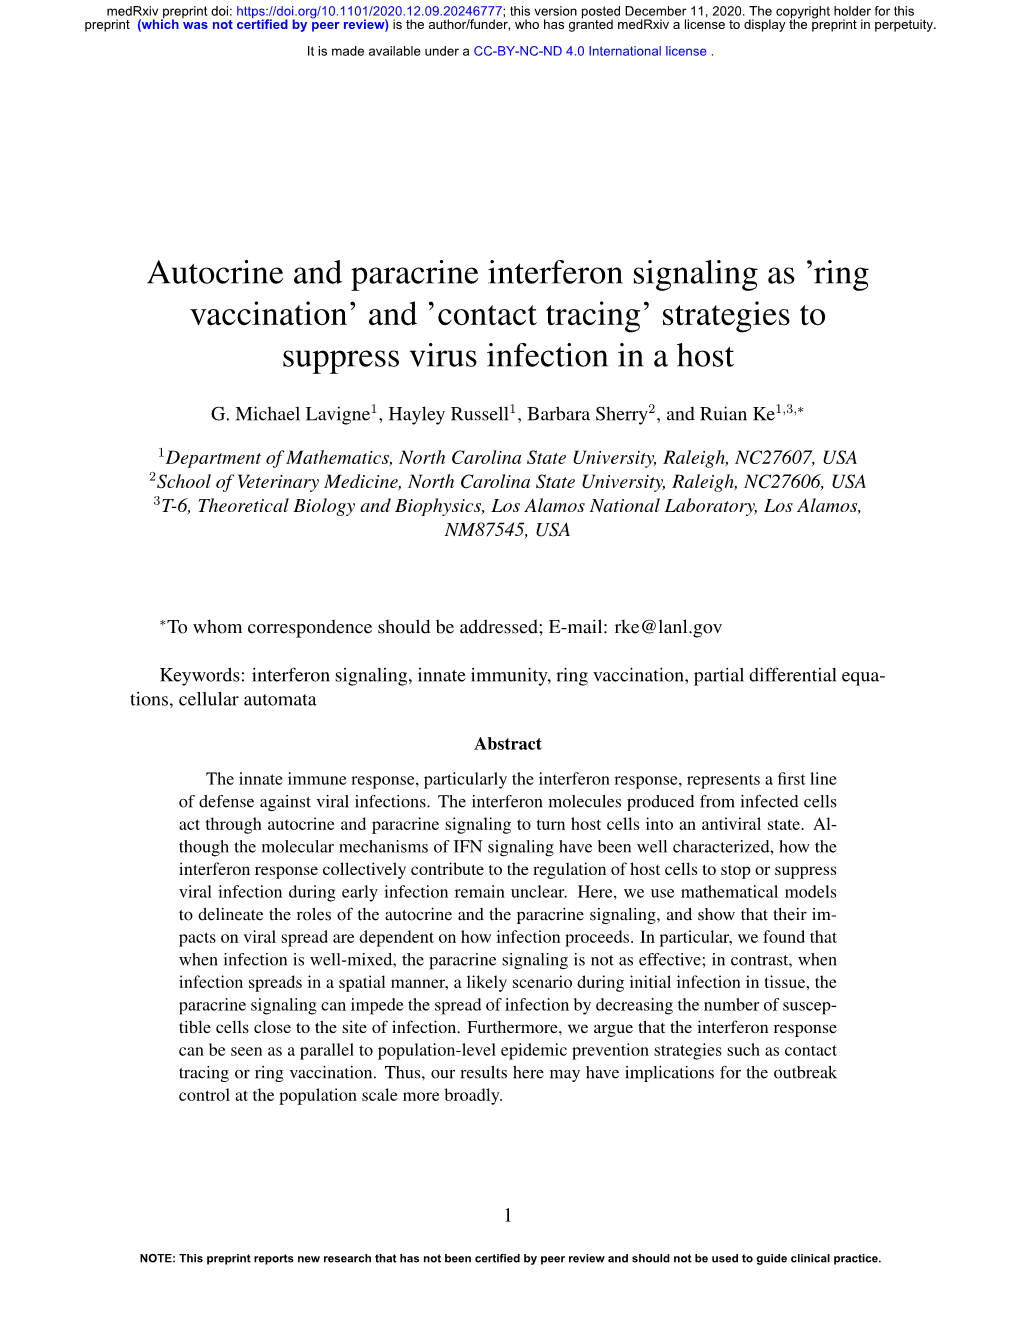 Autocrine and Paracrine Interferon Signaling As 'Ring Vaccination'